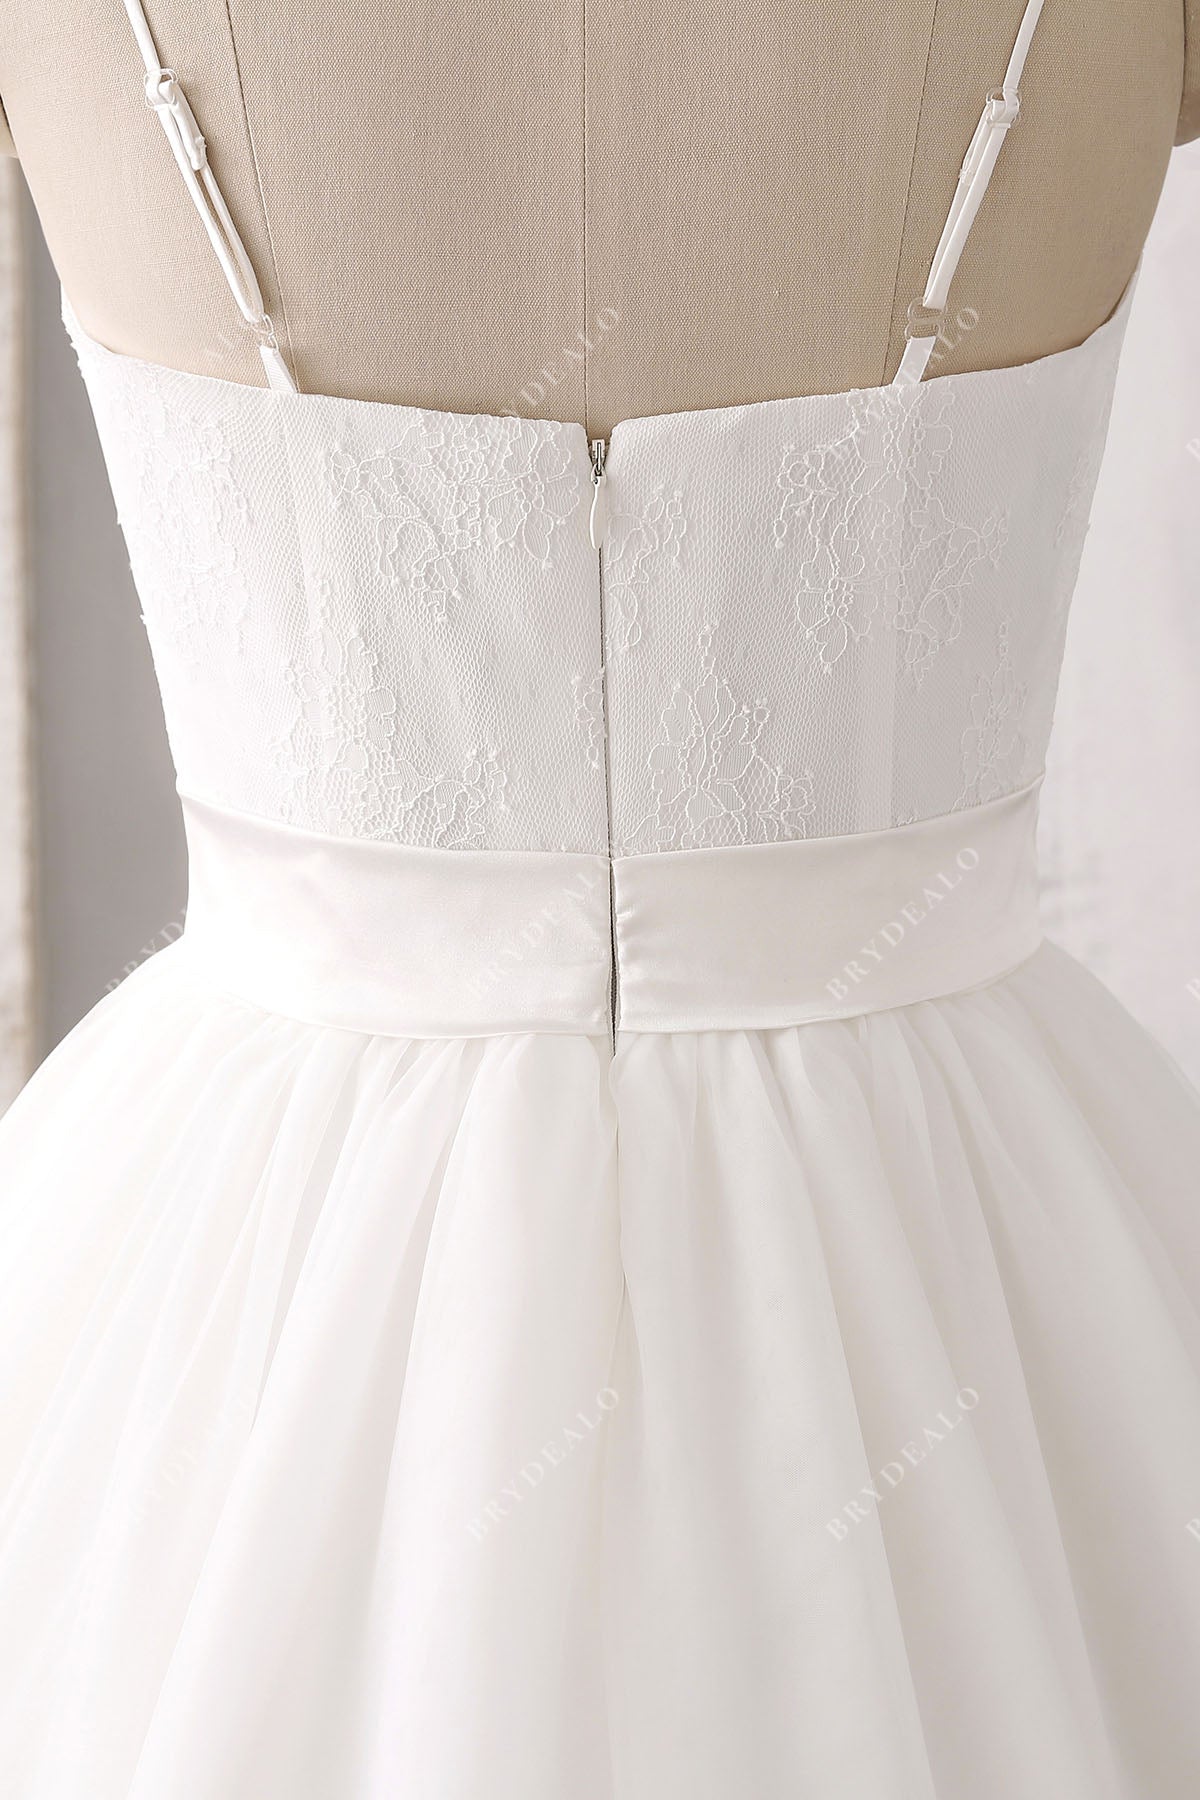 spaghetti straps strapless lace winter wedding dress